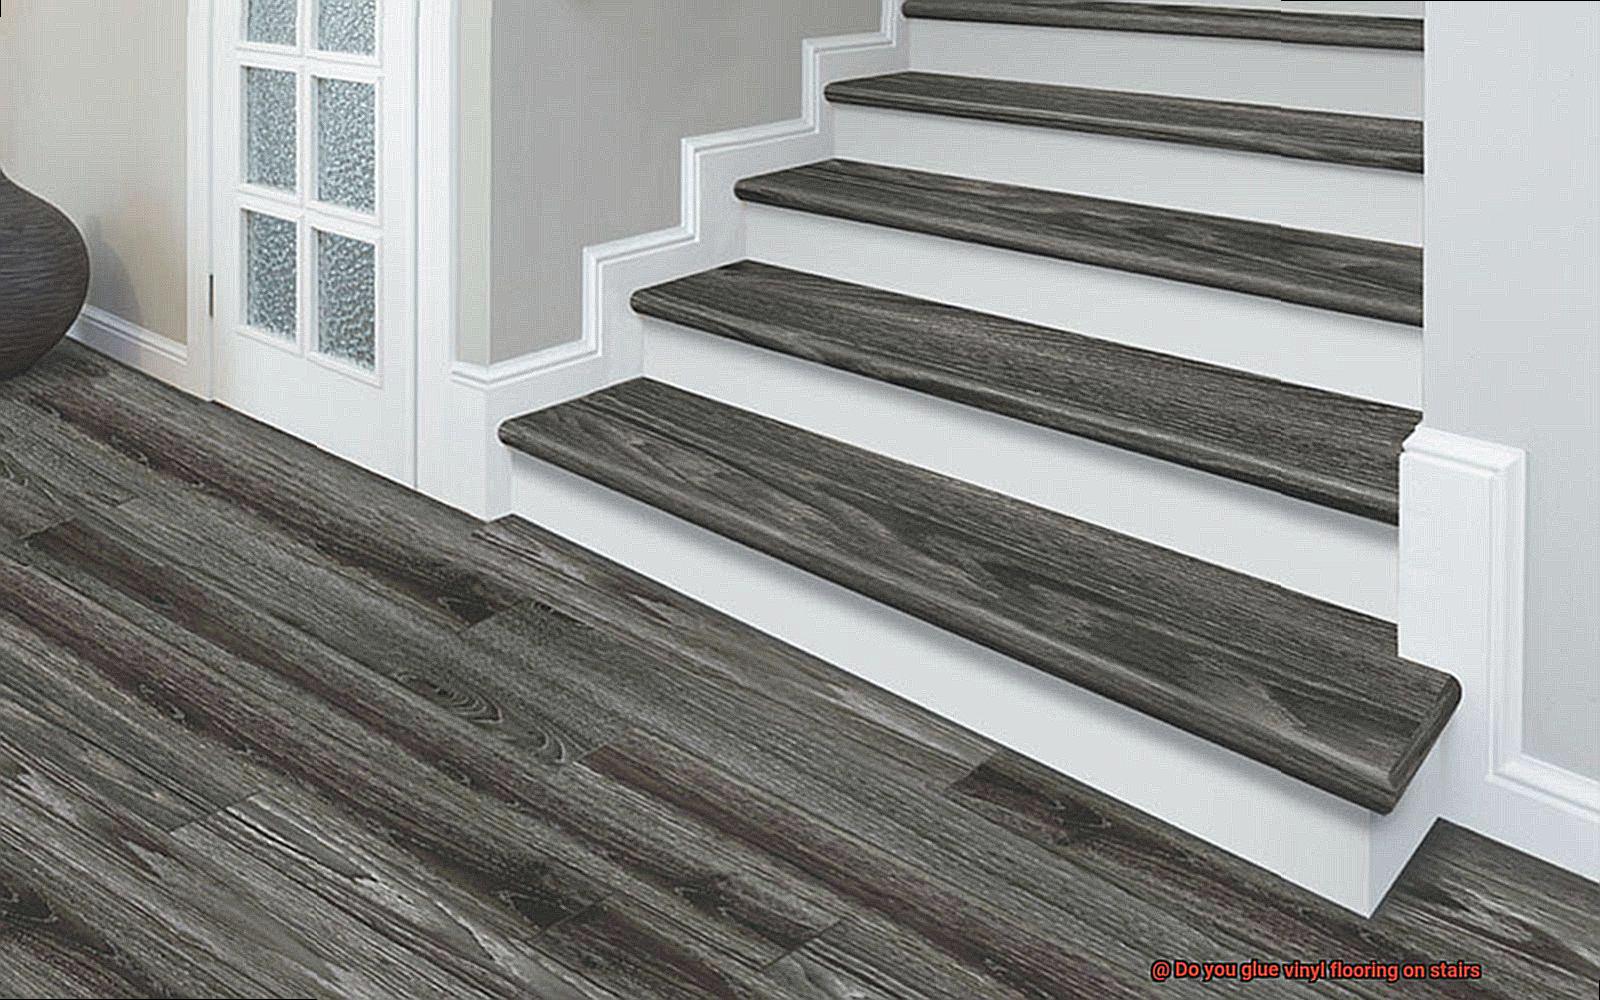 Do you glue vinyl flooring on stairs-6